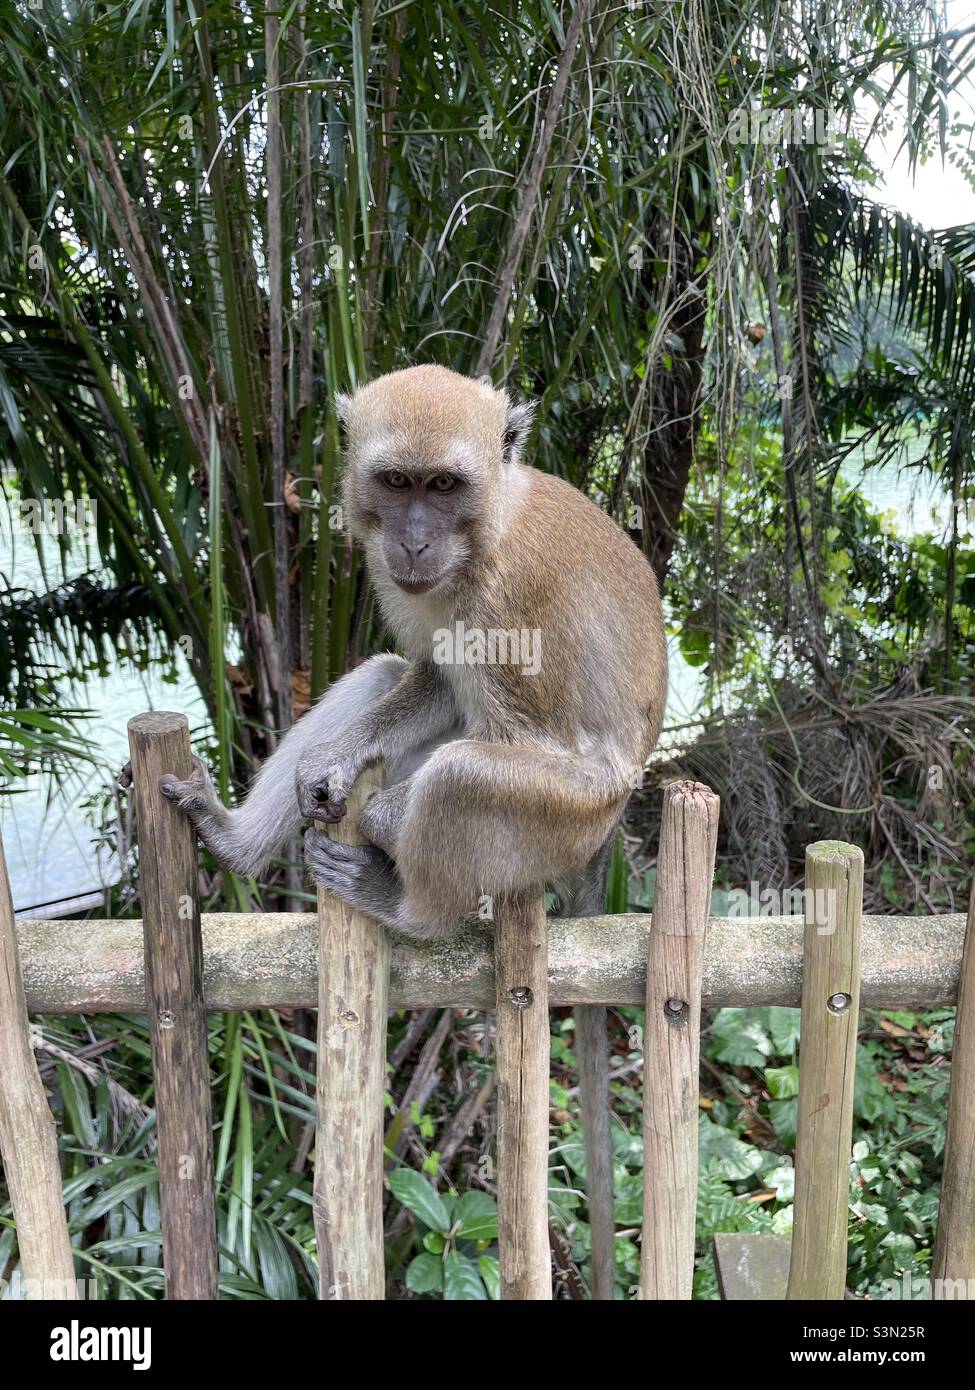 Monkey on a fence Stock Photo